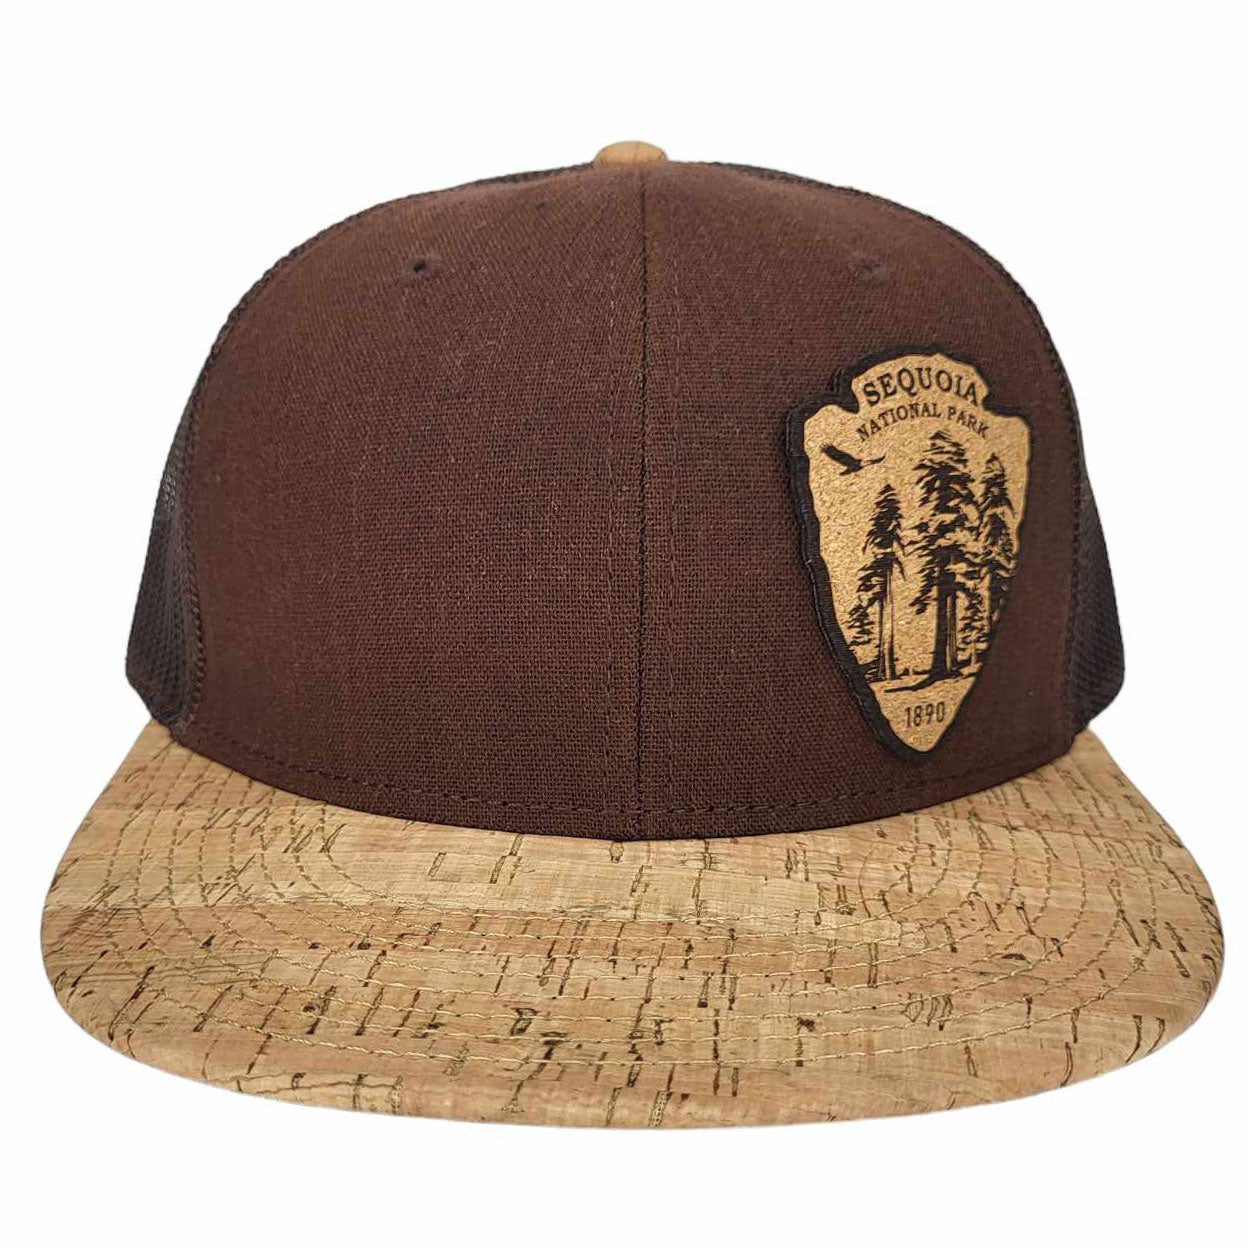 Sequoia National Park Cork Hat